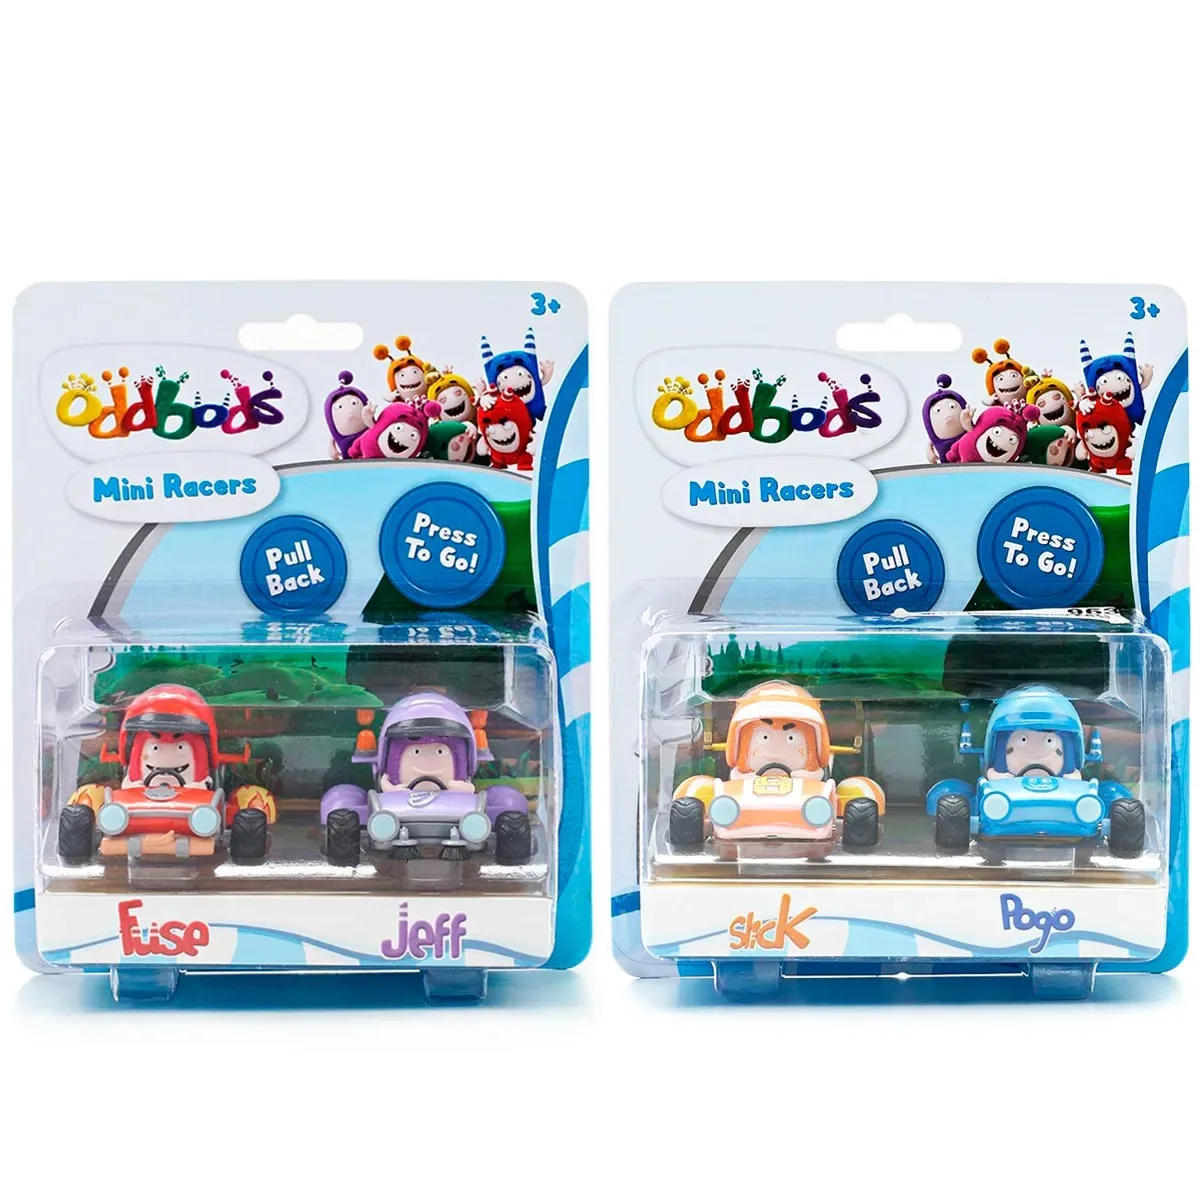 Oddbods Mini Racers Set of 2 Figures POGO & SLICK NEW Worldwide Shipping 